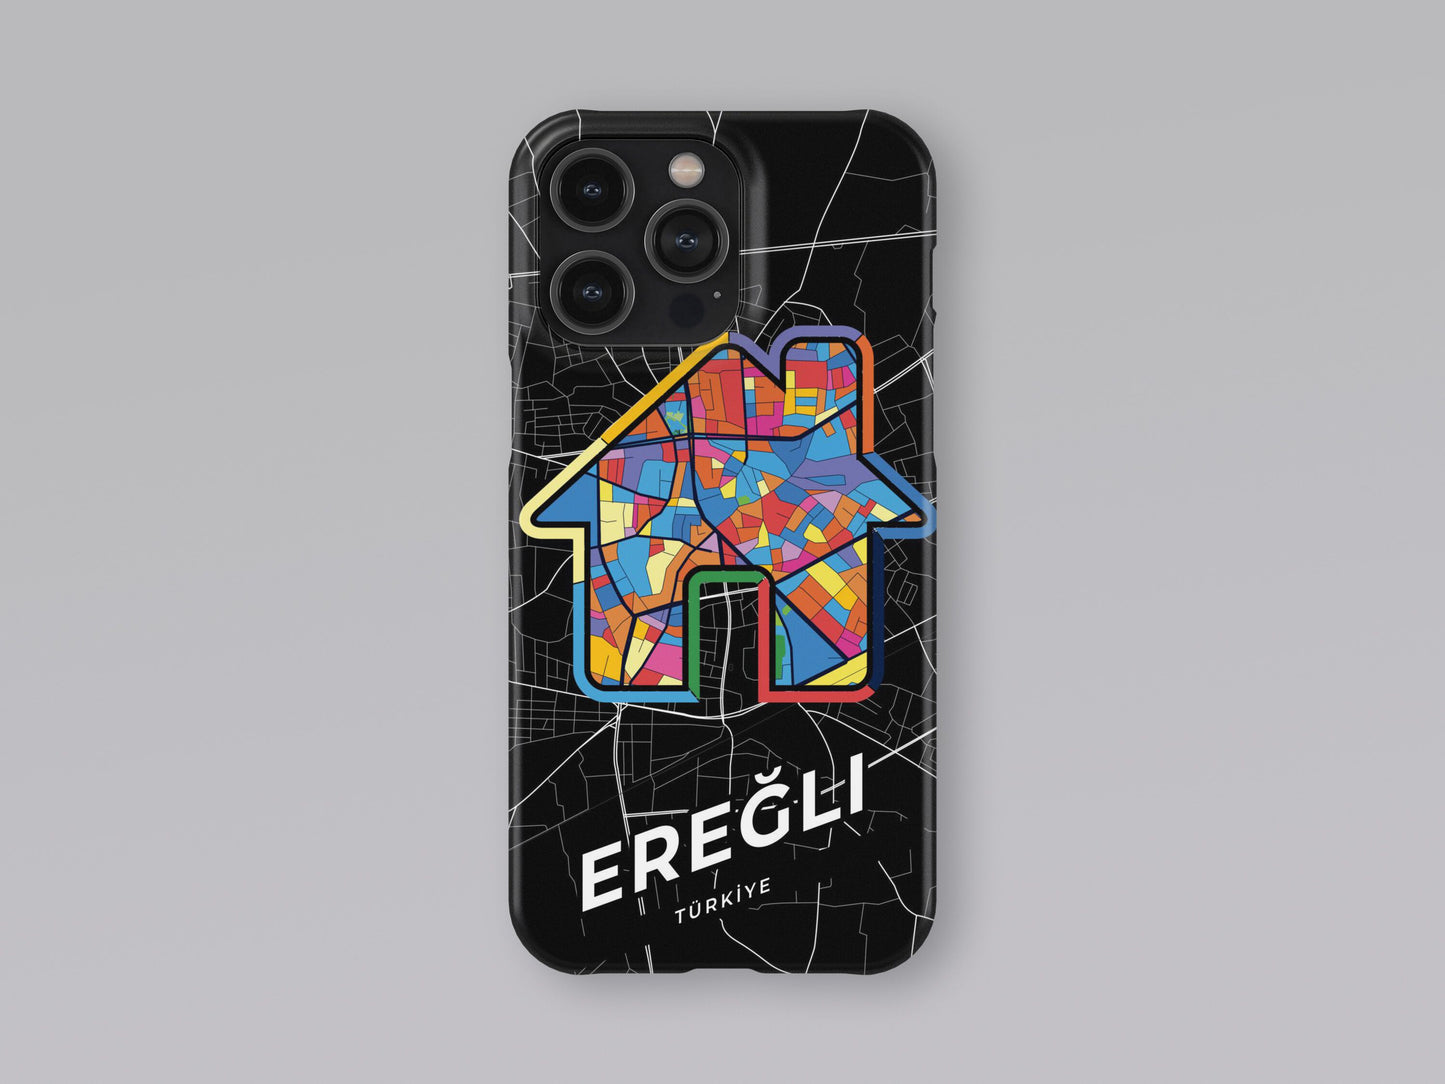 Ereğli Turkey slim phone case with colorful icon. Birthday, wedding or housewarming gift. Couple match cases. 3